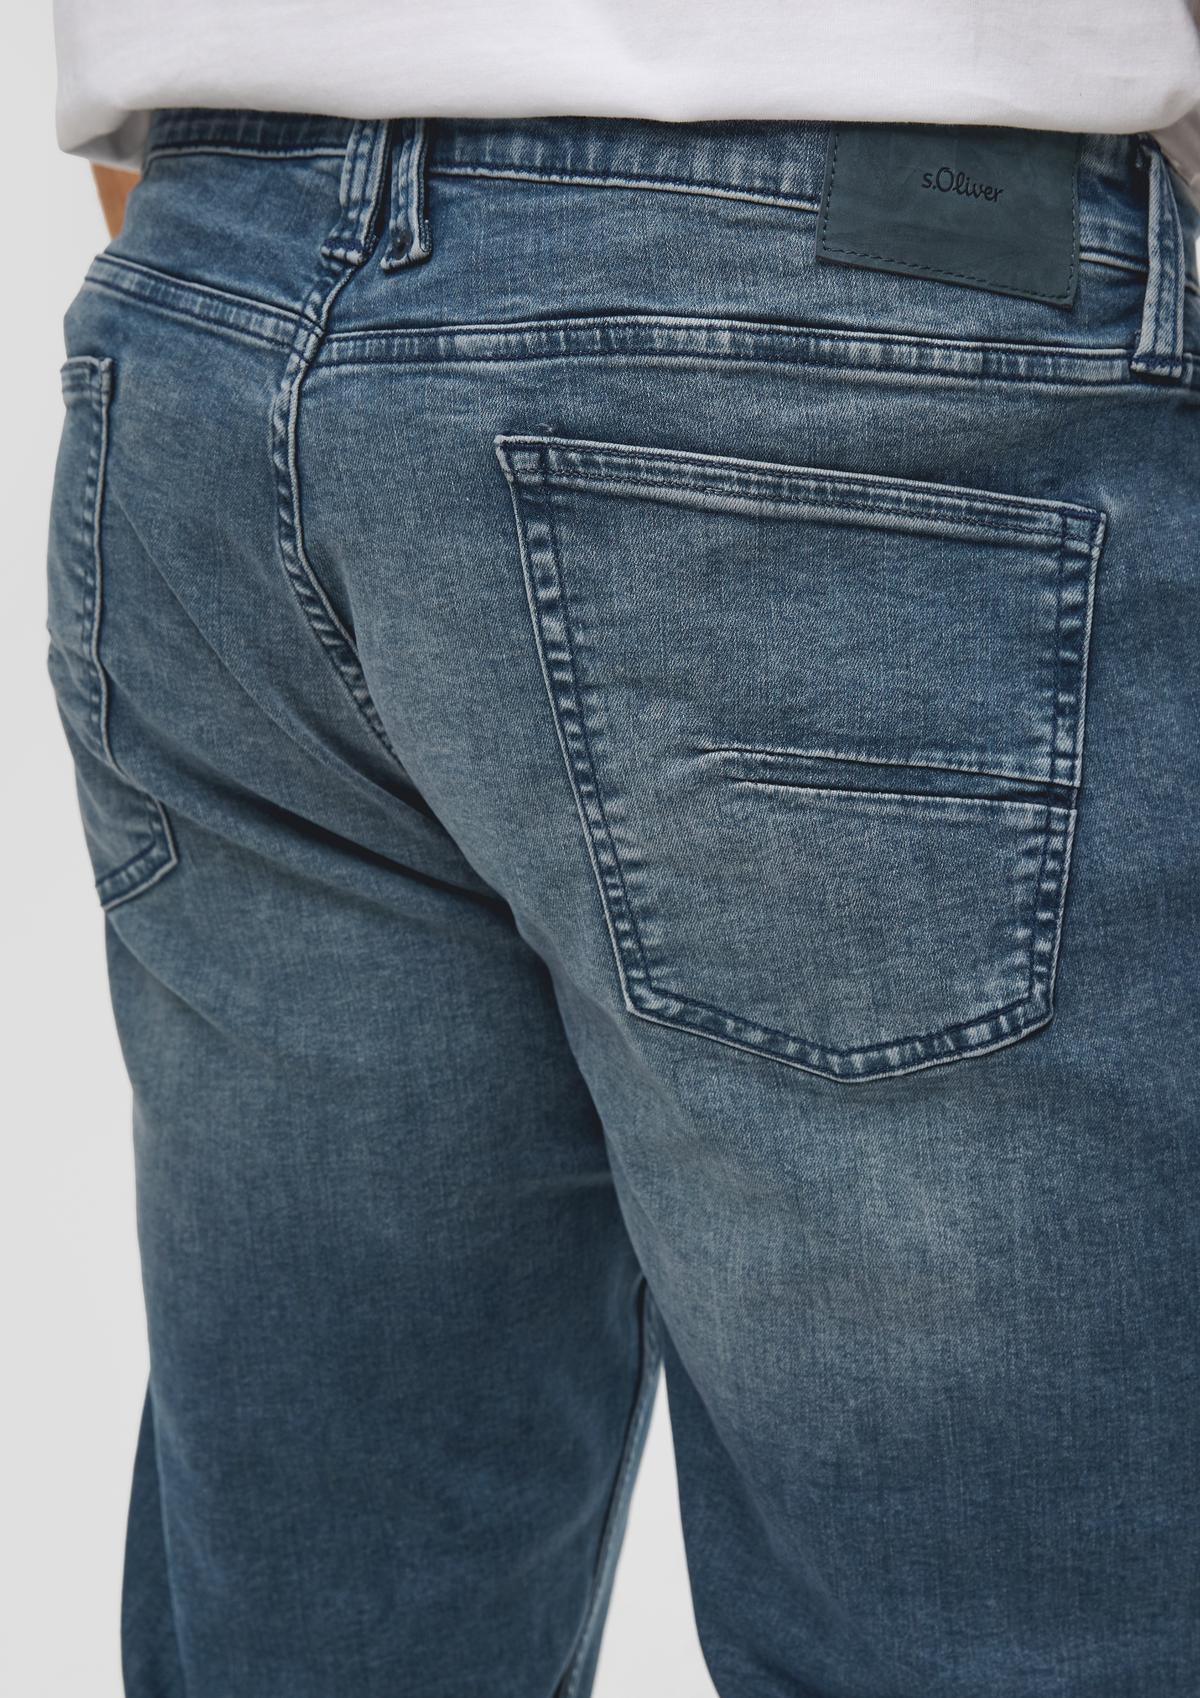 York jeans / regular / rise leg - mid regular fit / blue